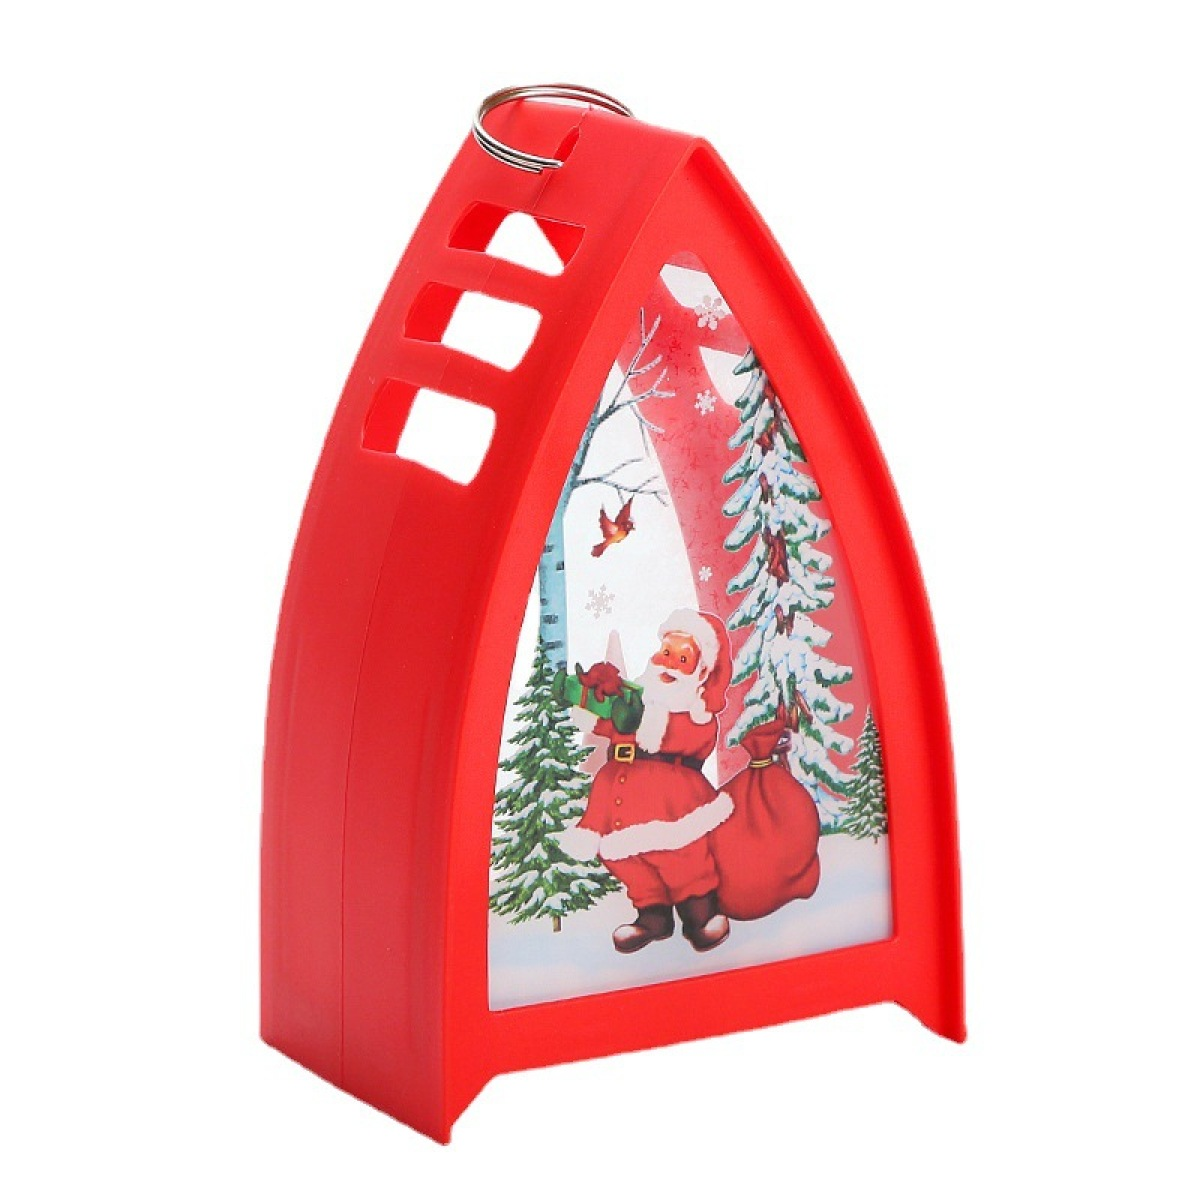 COZEVDNT Decorative Christmas Lantern and for Holiday Indoor - Bronze Decor Weihnachtsdeko, Outdoor